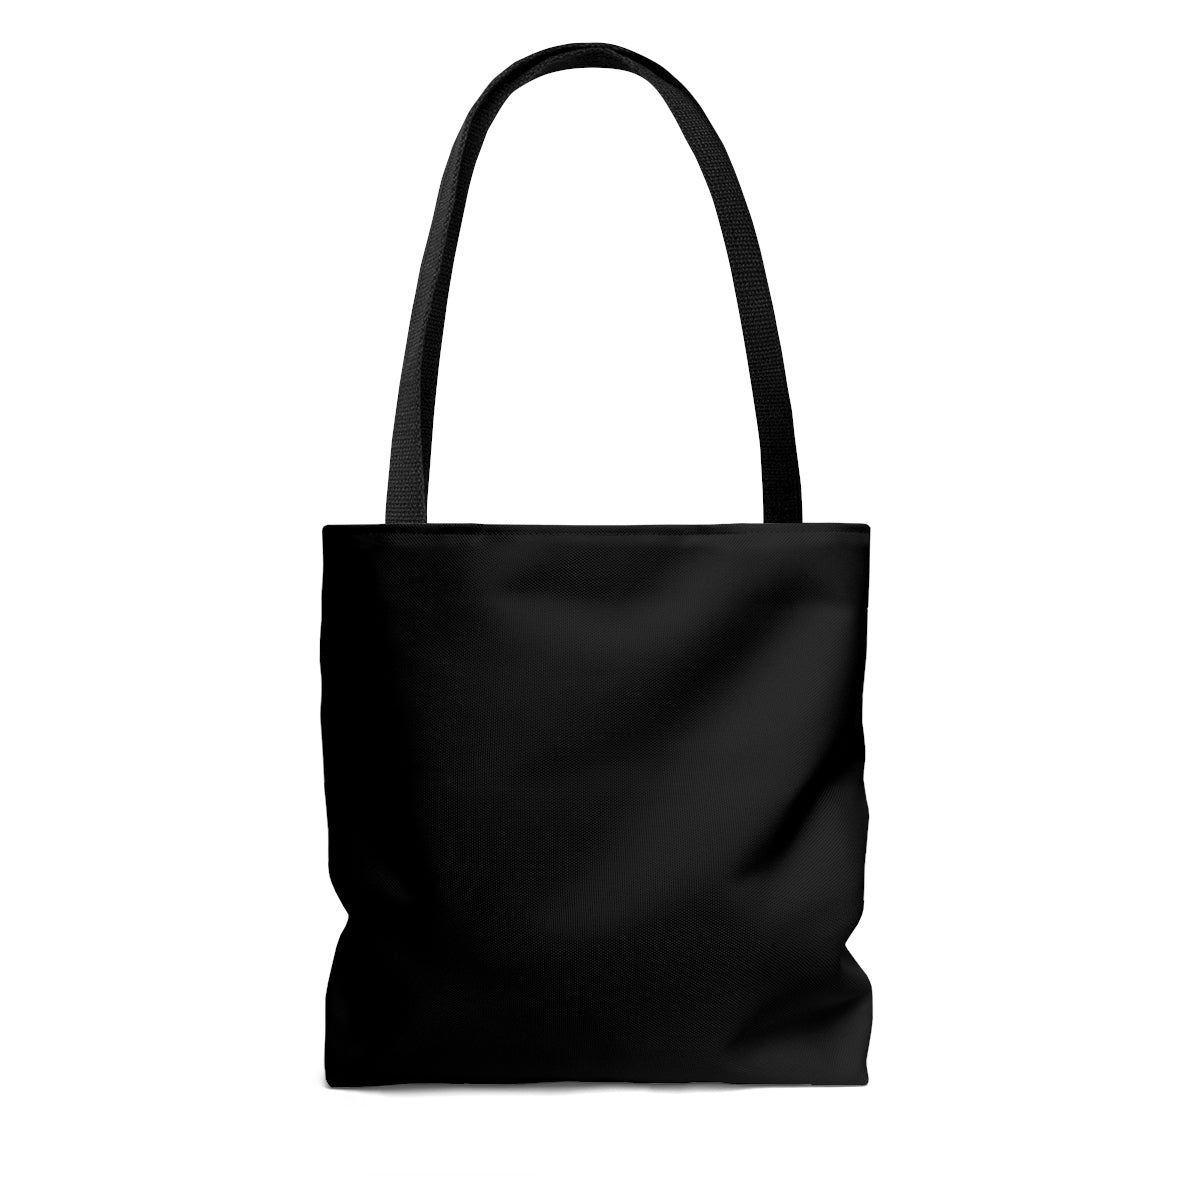 Succubae Tote Bag (Black) by fawnbomb - peachiieshop